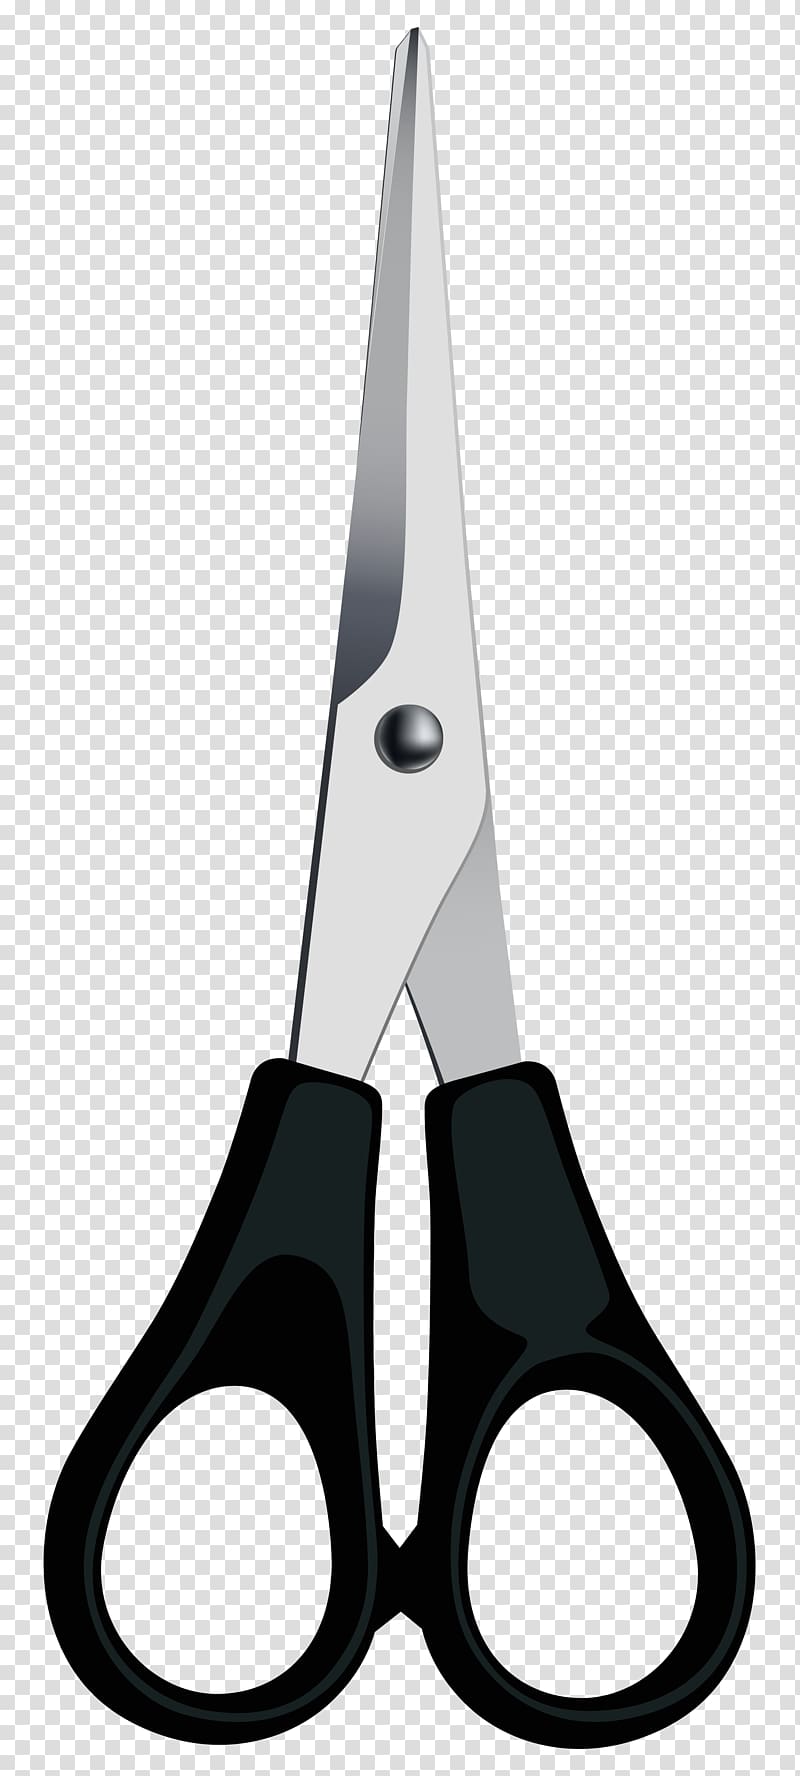 gray and black scissors , Scissors Cutting Tool Handle Material, Scissors transparent background PNG clipart